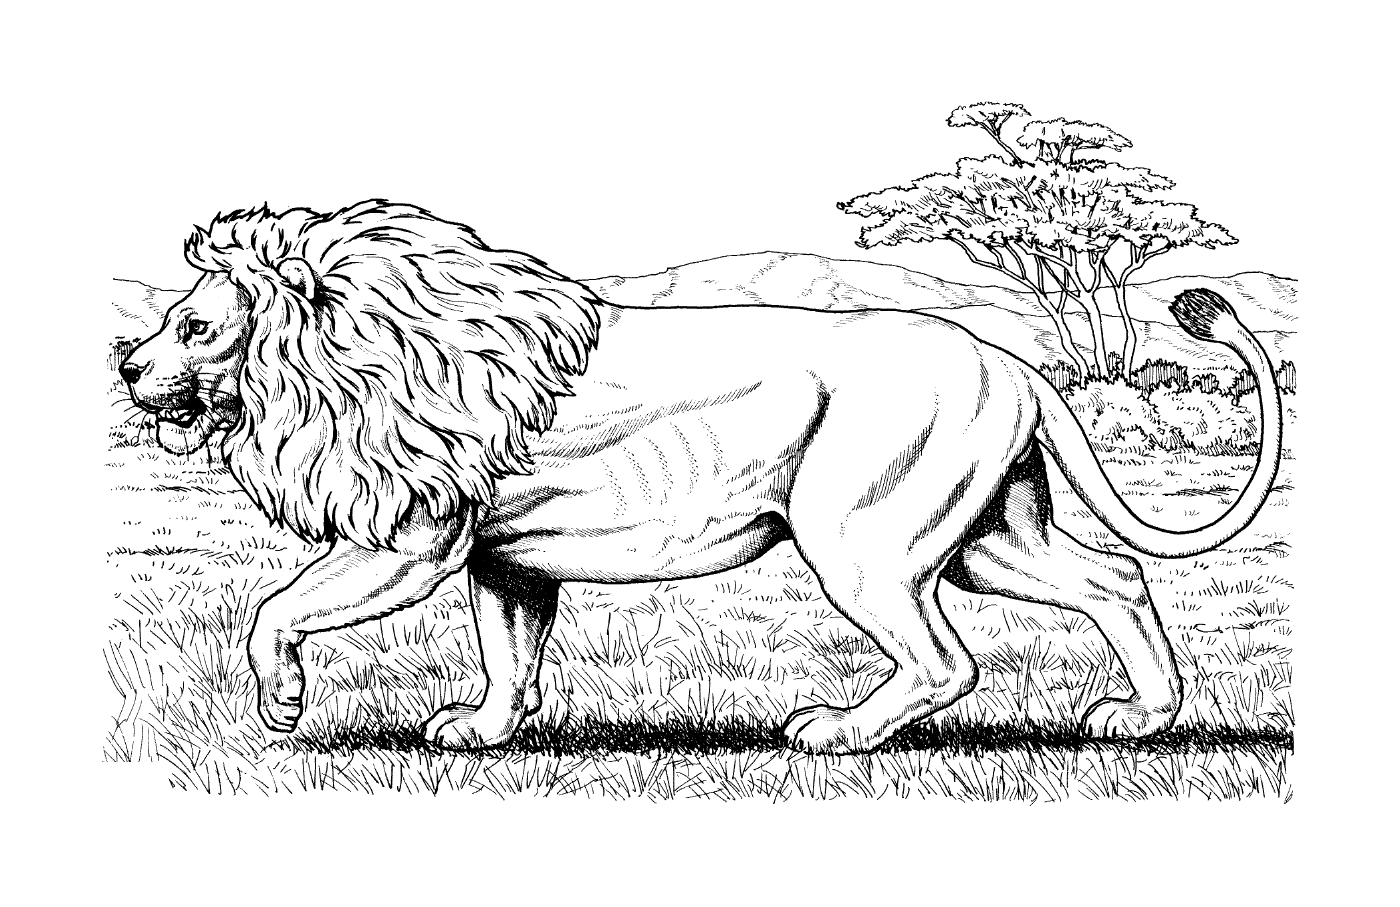  African lion walking in grass 